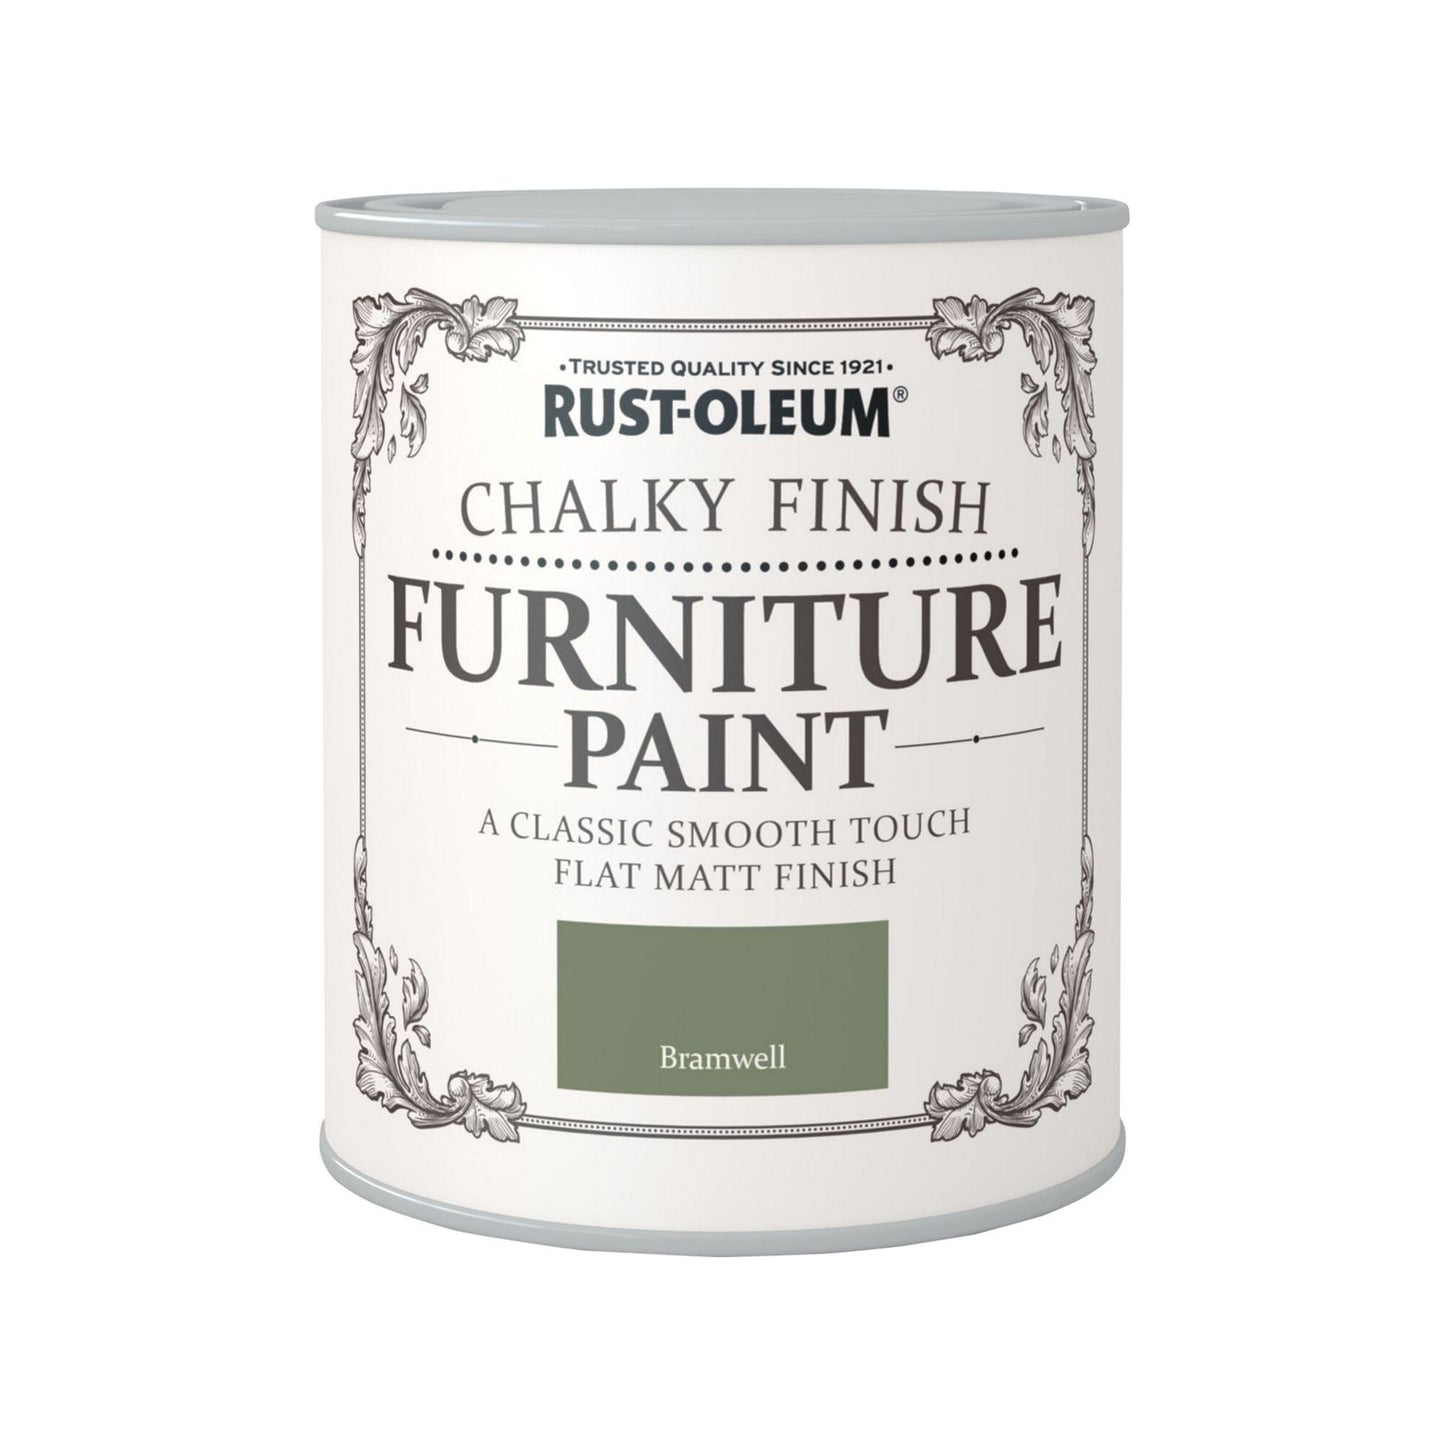 Rust-Oleum Chalky Finish Furniture Paint Bramwell